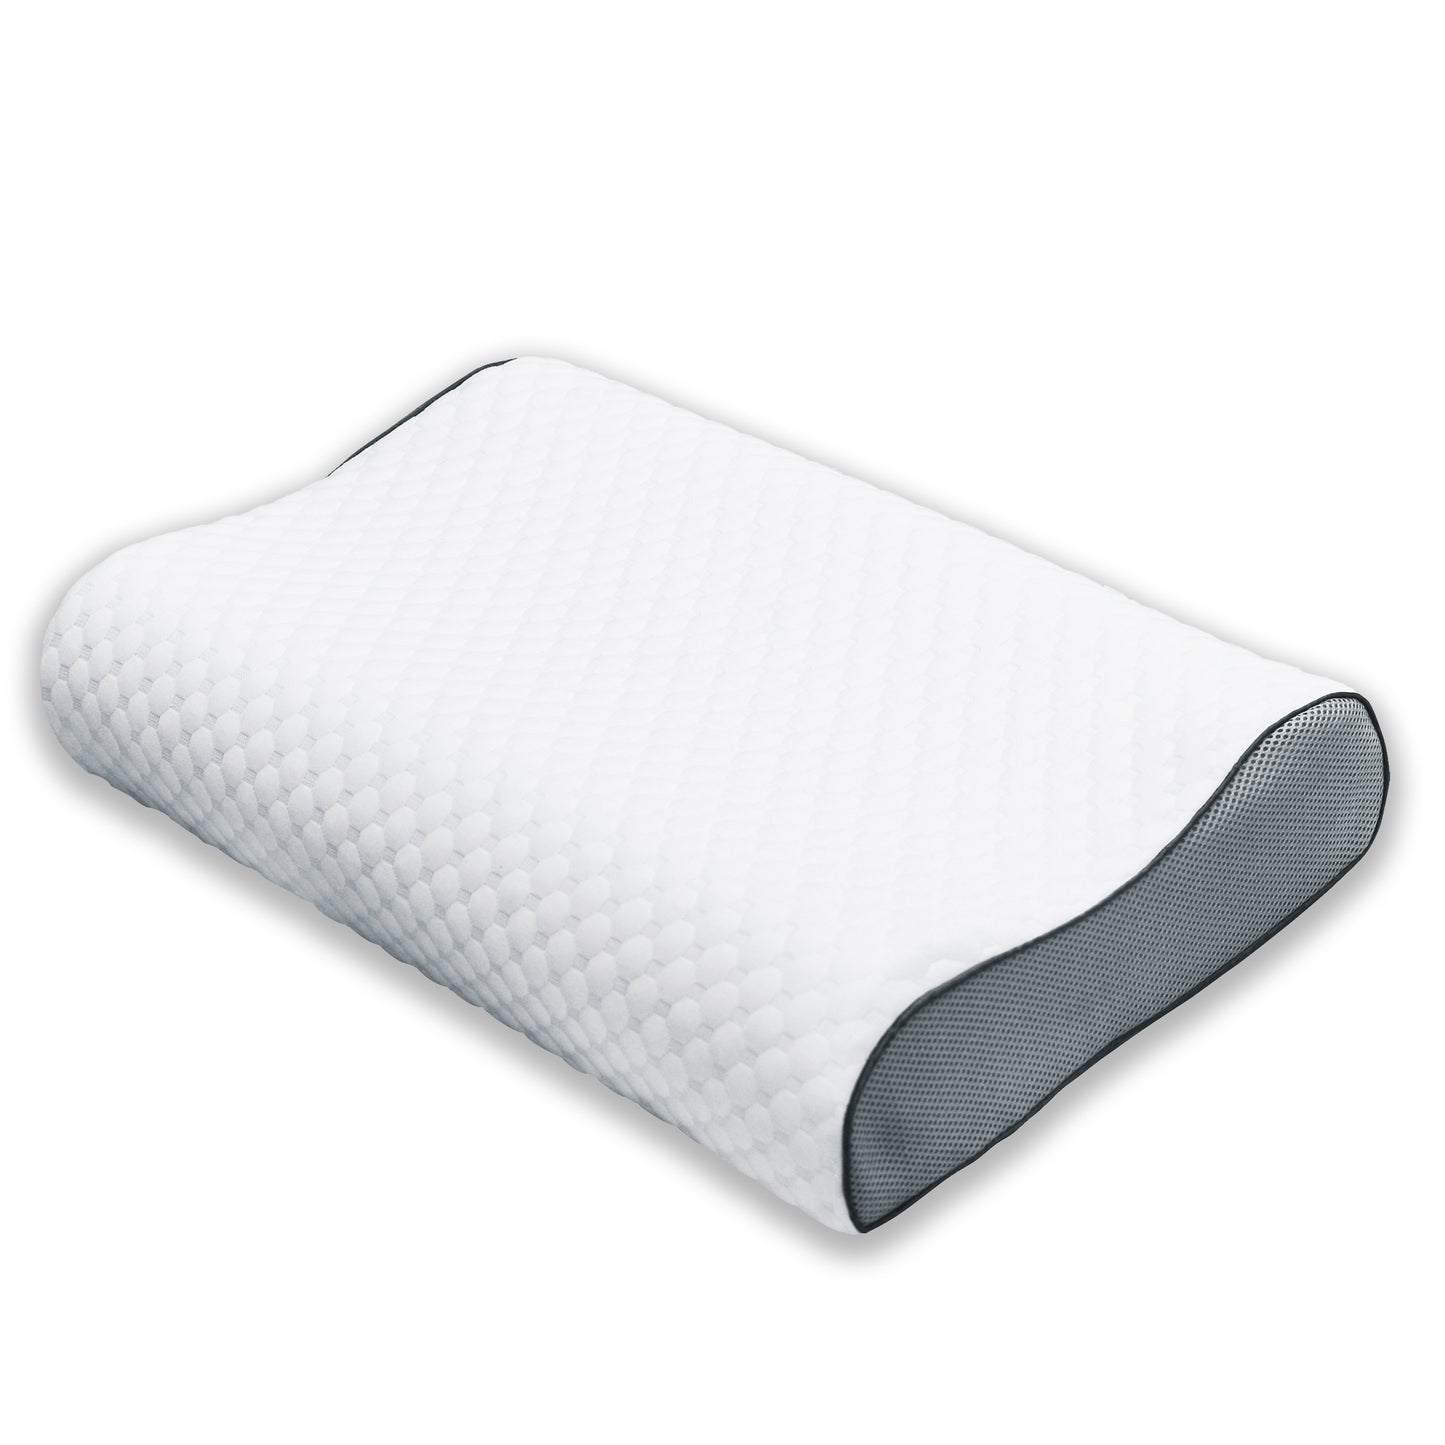 Herzberg HG-6412H0: Contour Memory Foam Pillow